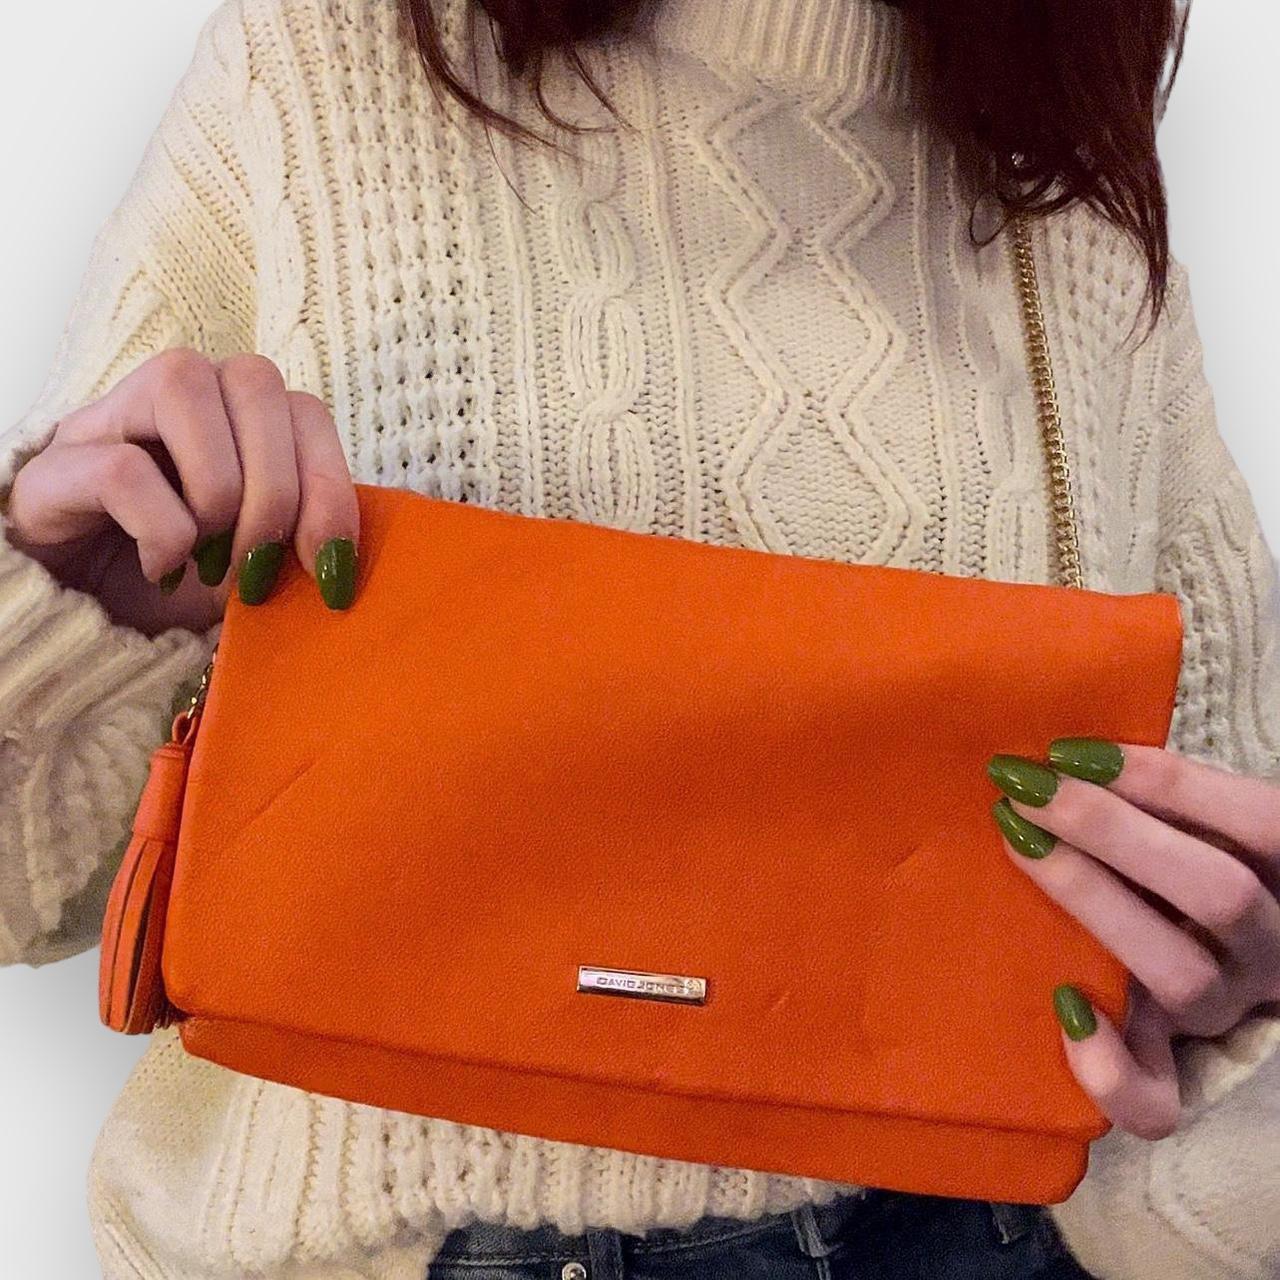 Dorothy Perkins Orange Faux Suede Clutch Bag | Suede clutch, Orange handbag,  Orange clutches